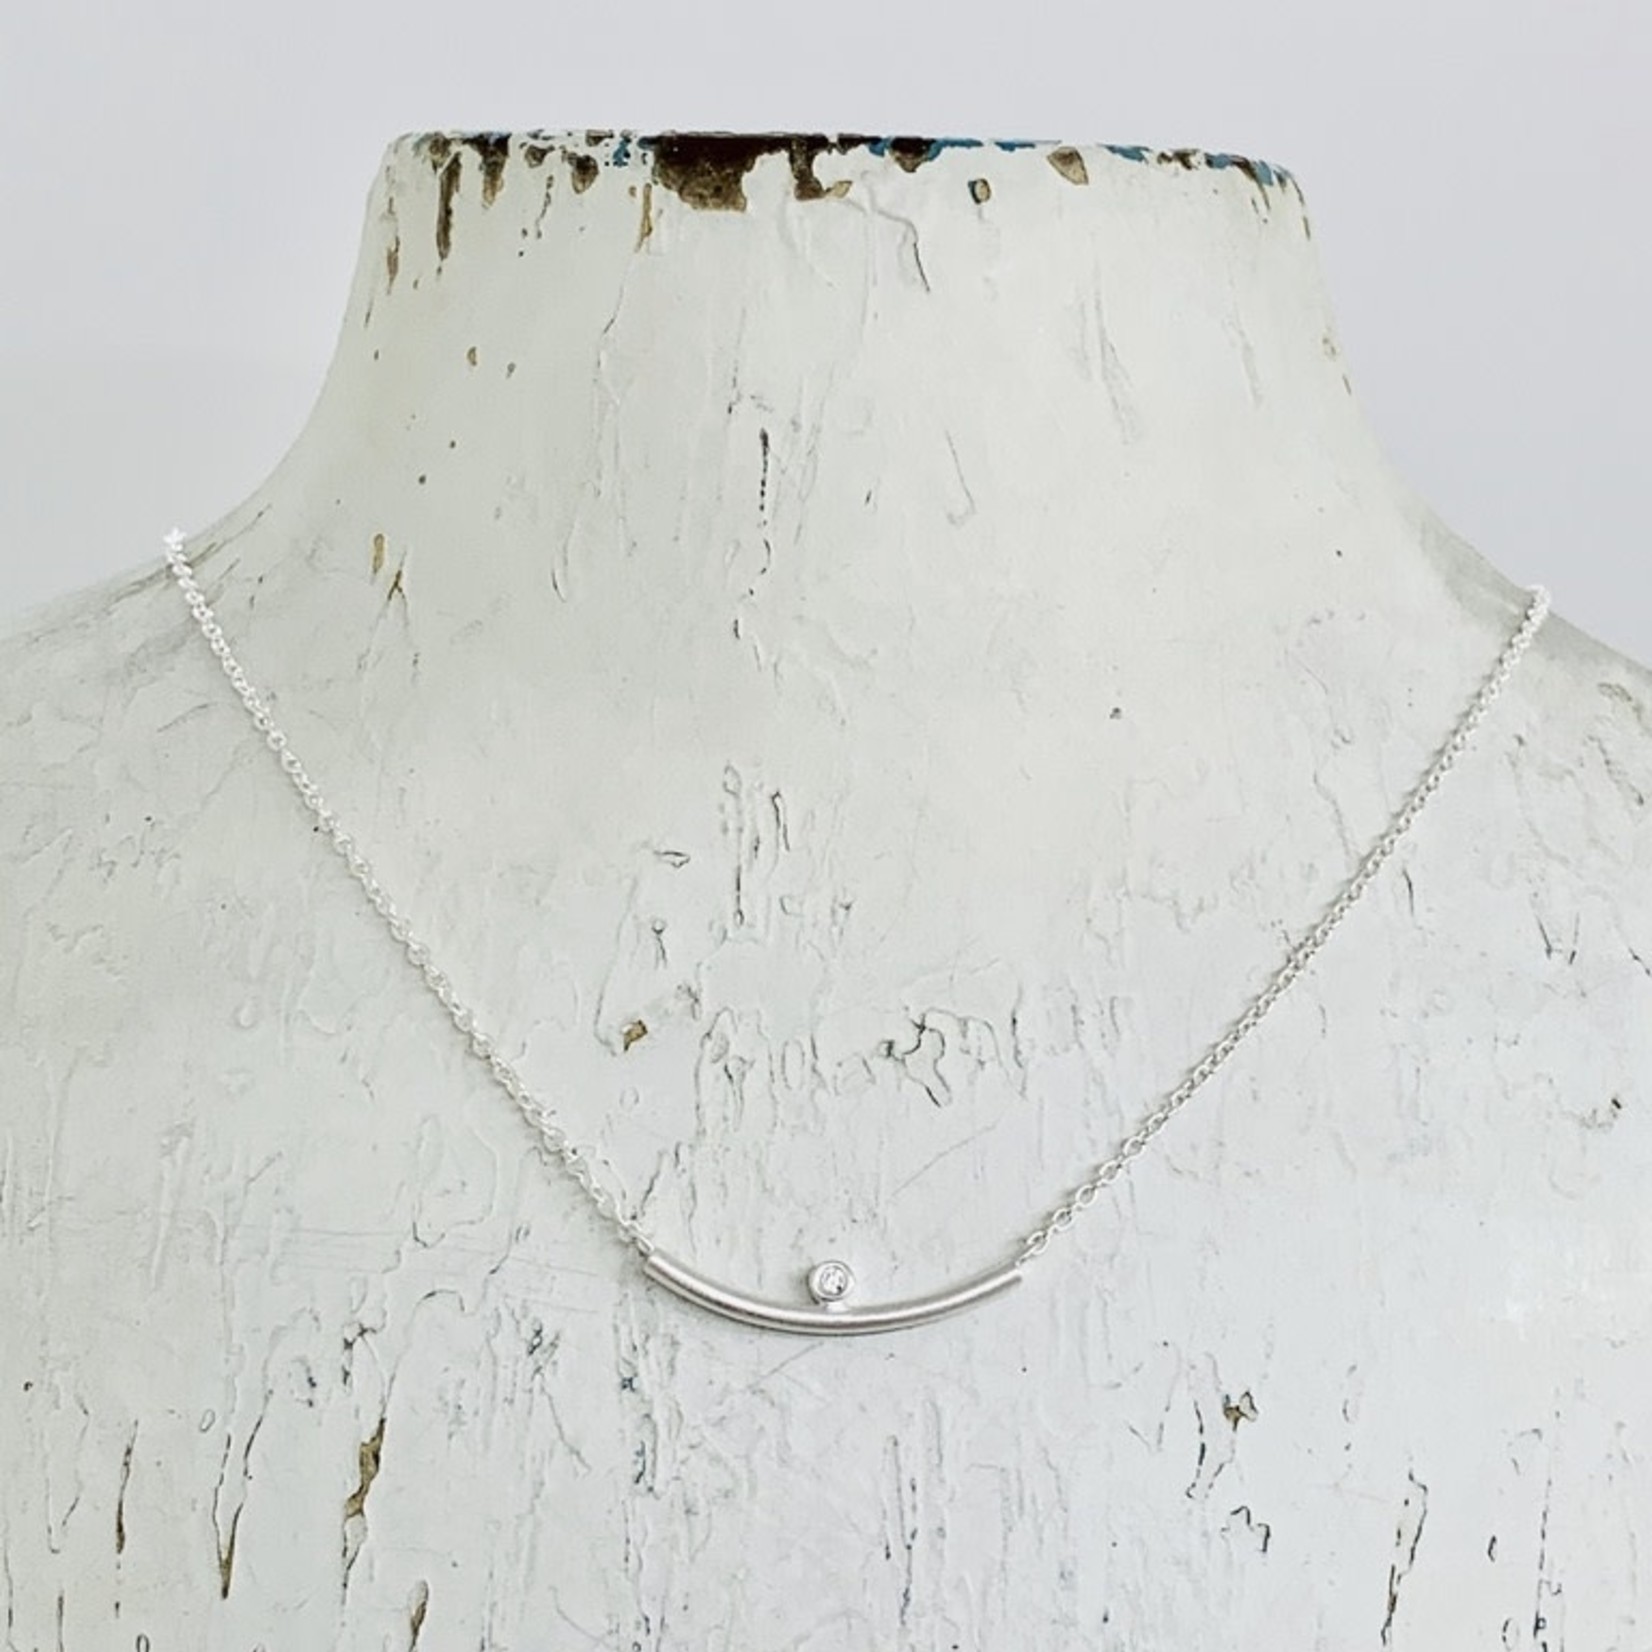 Brushed Sterling Silver Curved Bar necklace with Bezel Set CZ above